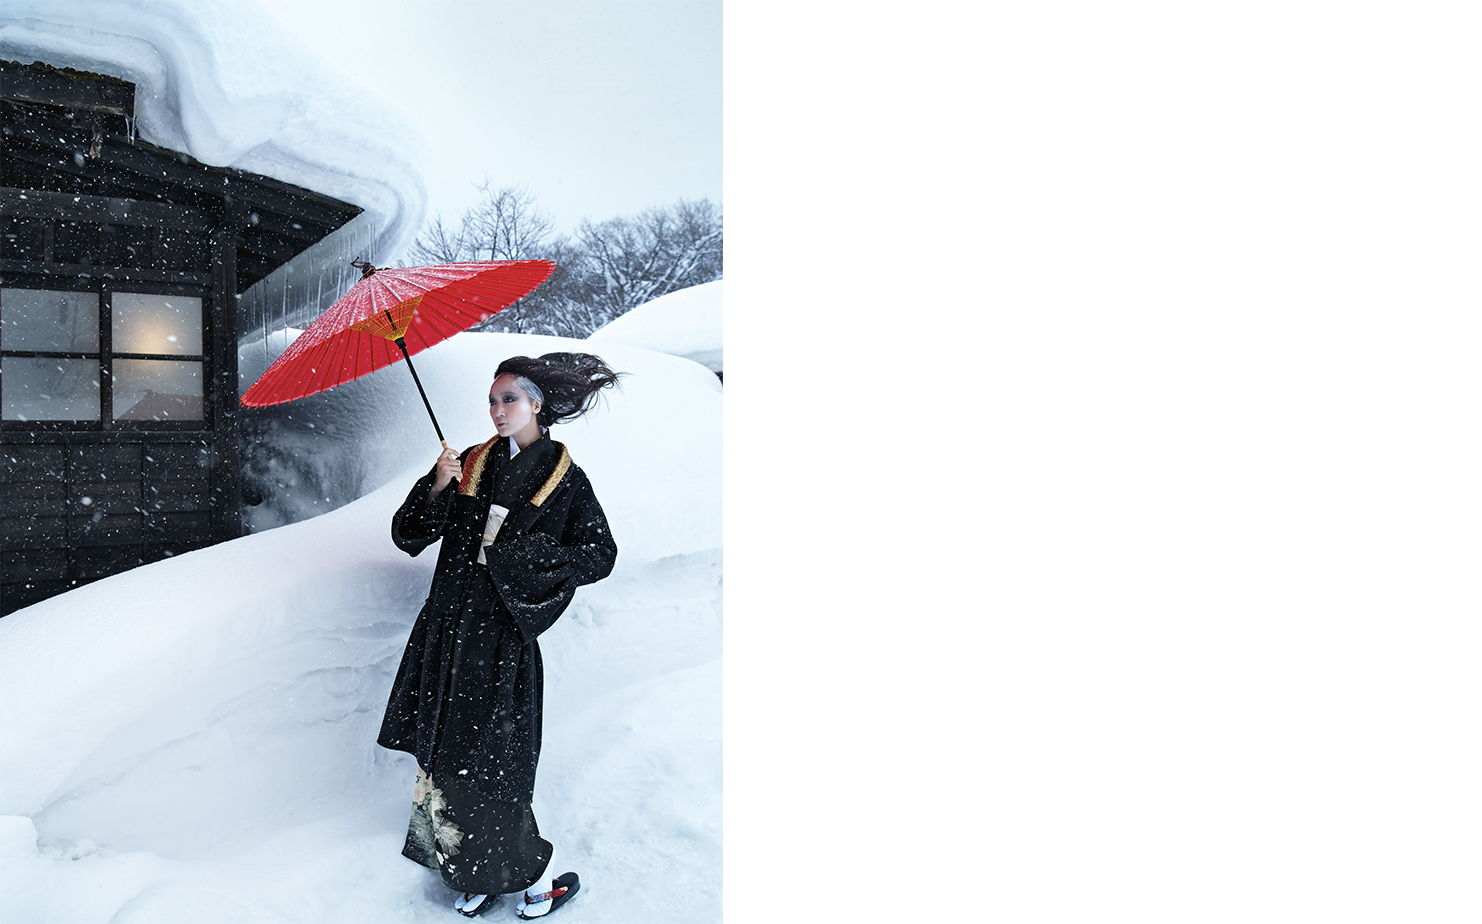   T Magazine SNOW BOUND   ART DIRECTOR David Sebbah FASHION EDITOR Tiina Laakkonen 